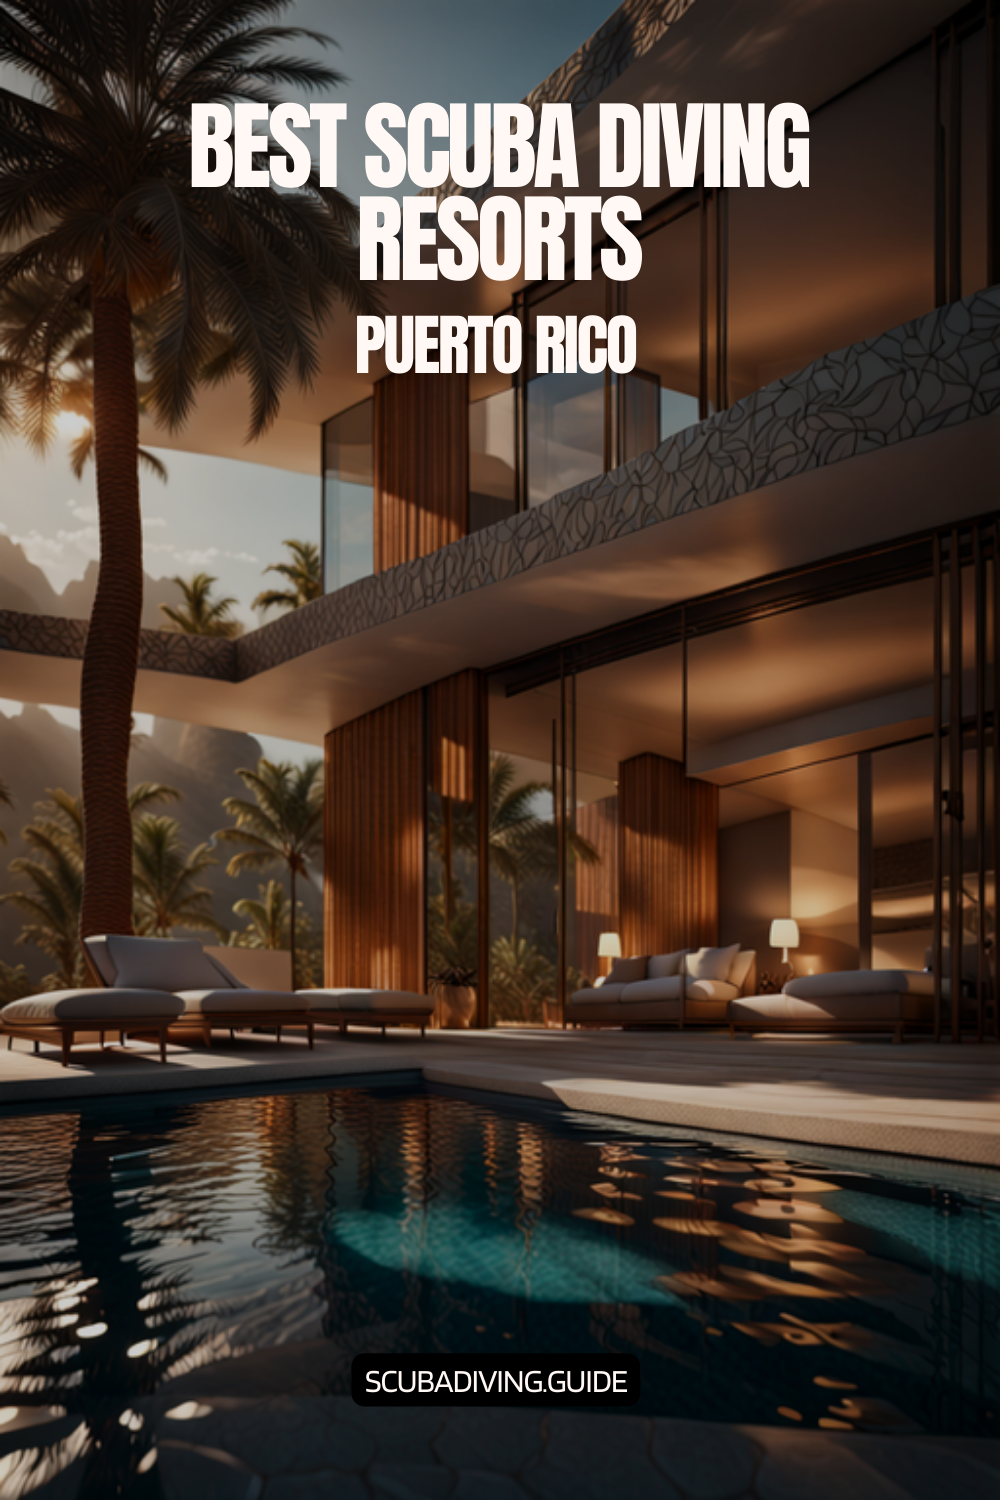 Puerto Rico Dive Resorts